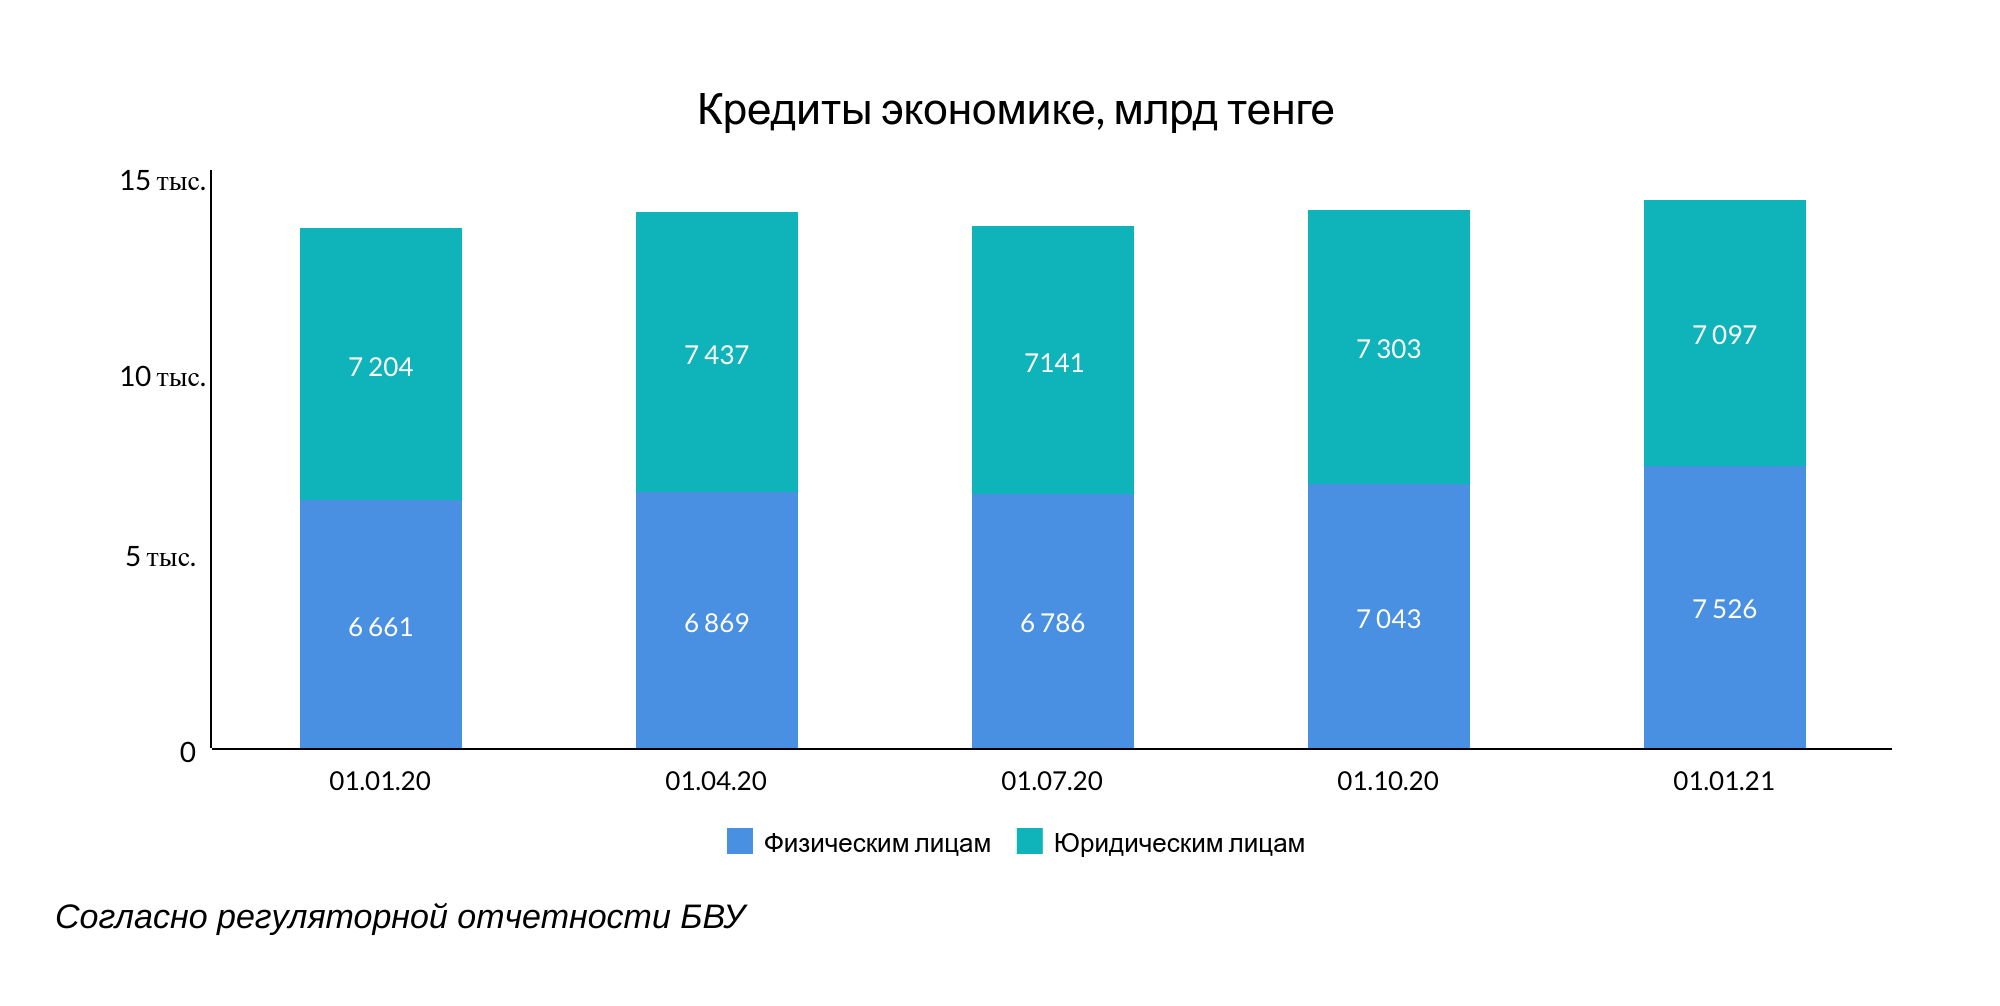 Банки Казахстана продолжают наращивать запасы ликвидности 591099 - Kapital.kz 